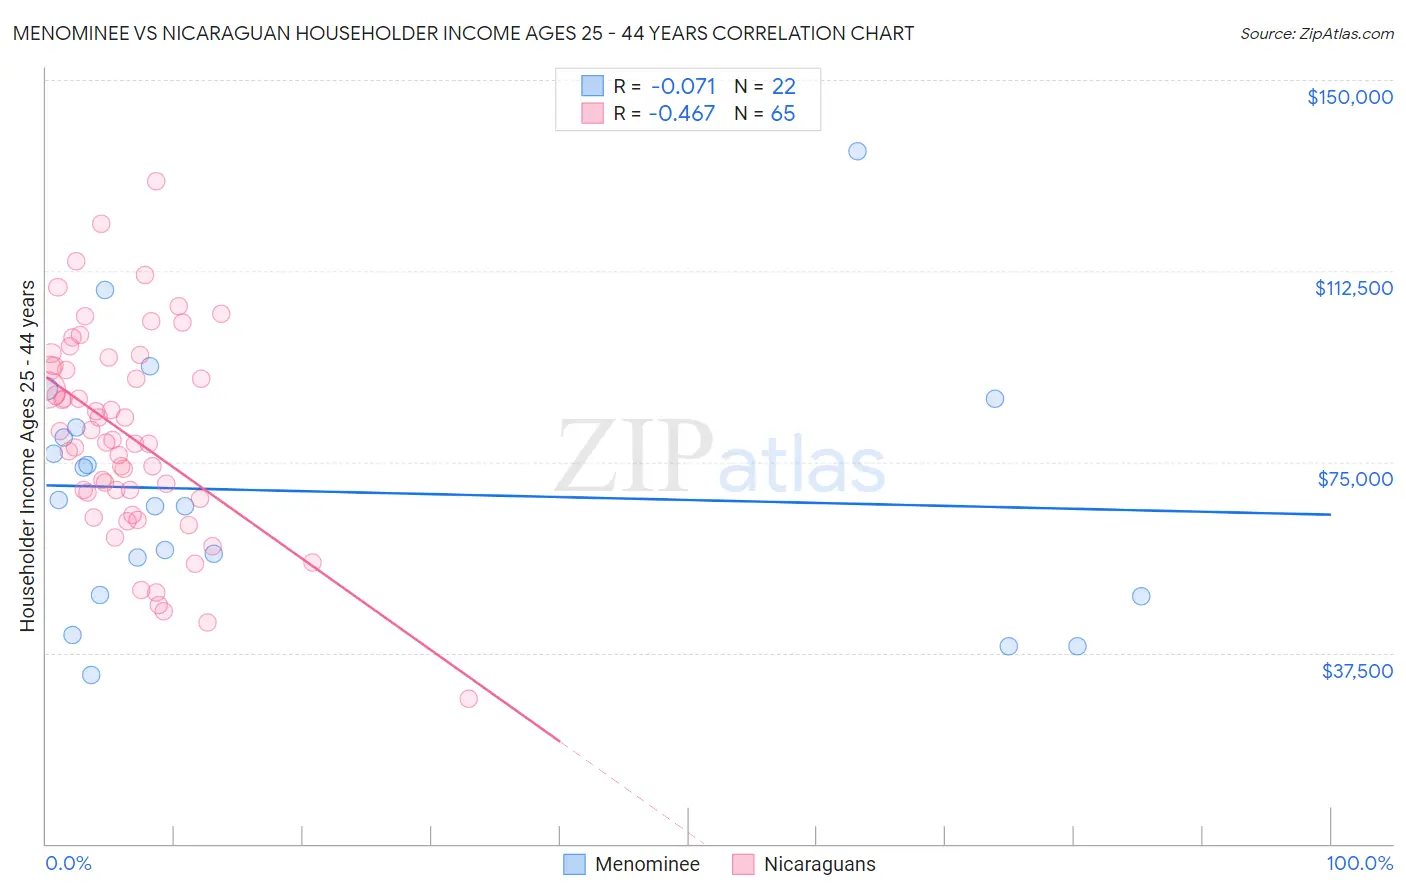 Menominee vs Nicaraguan Householder Income Ages 25 - 44 years